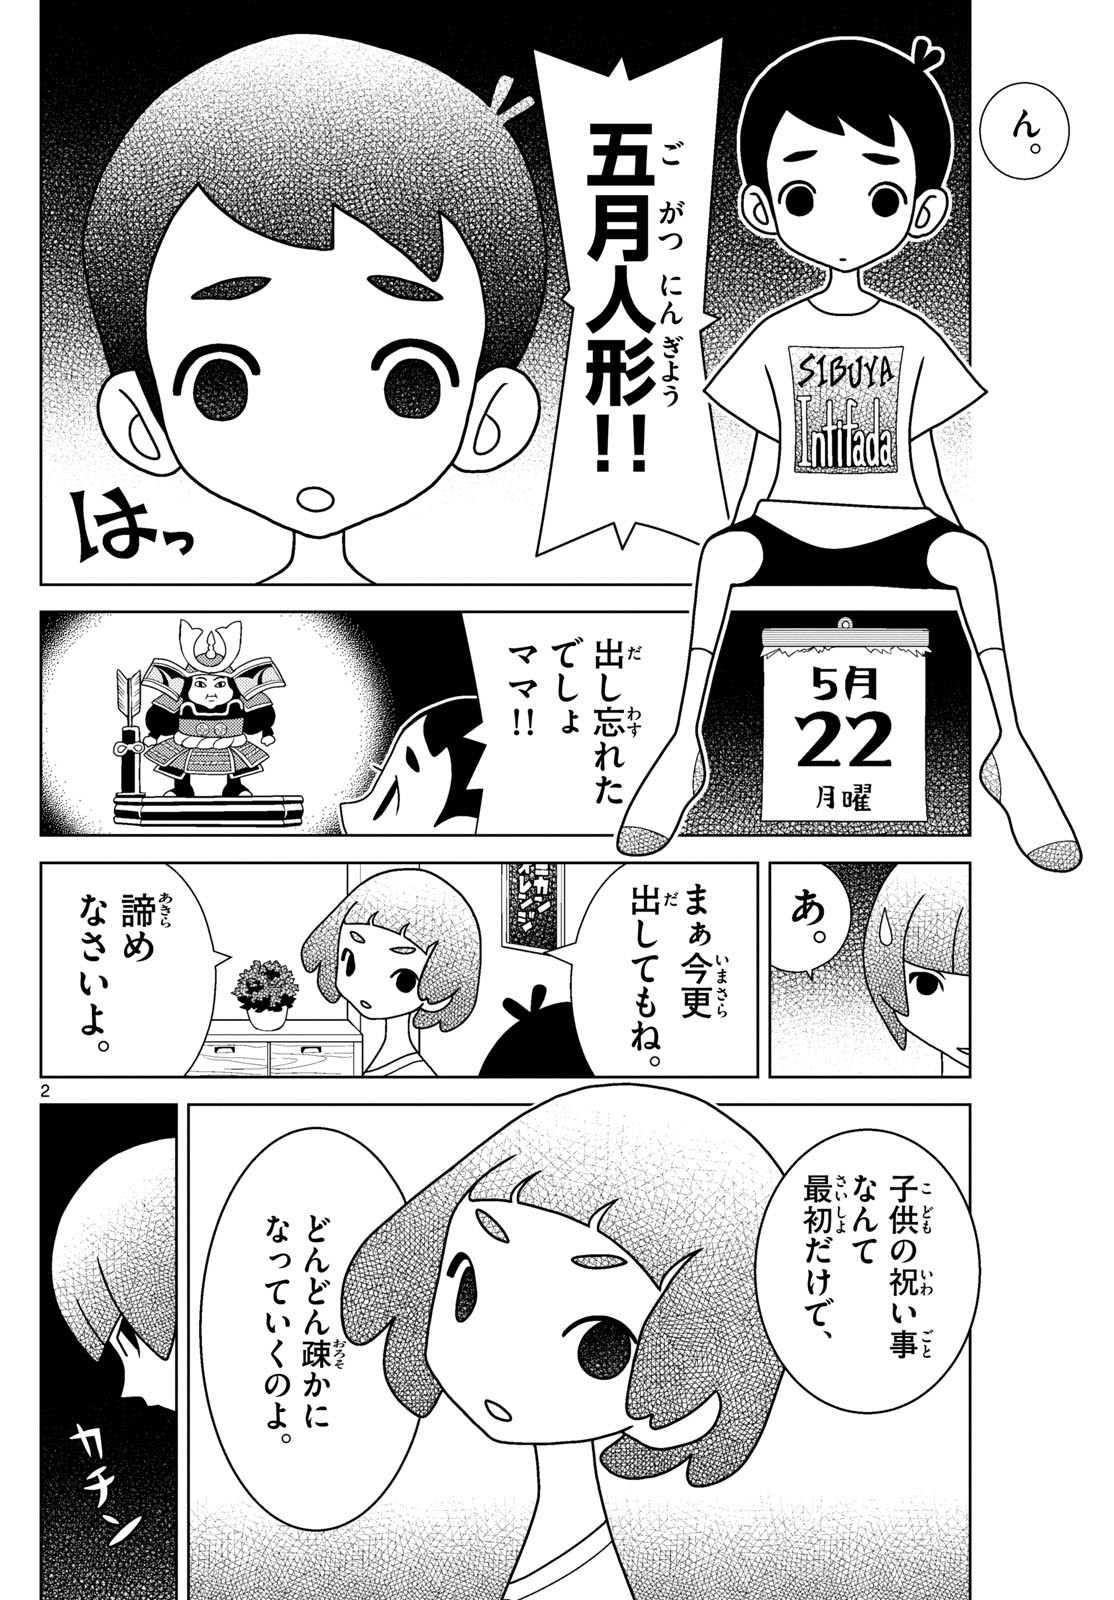 Shibuya Near Family - Chapter 095 - Page 2